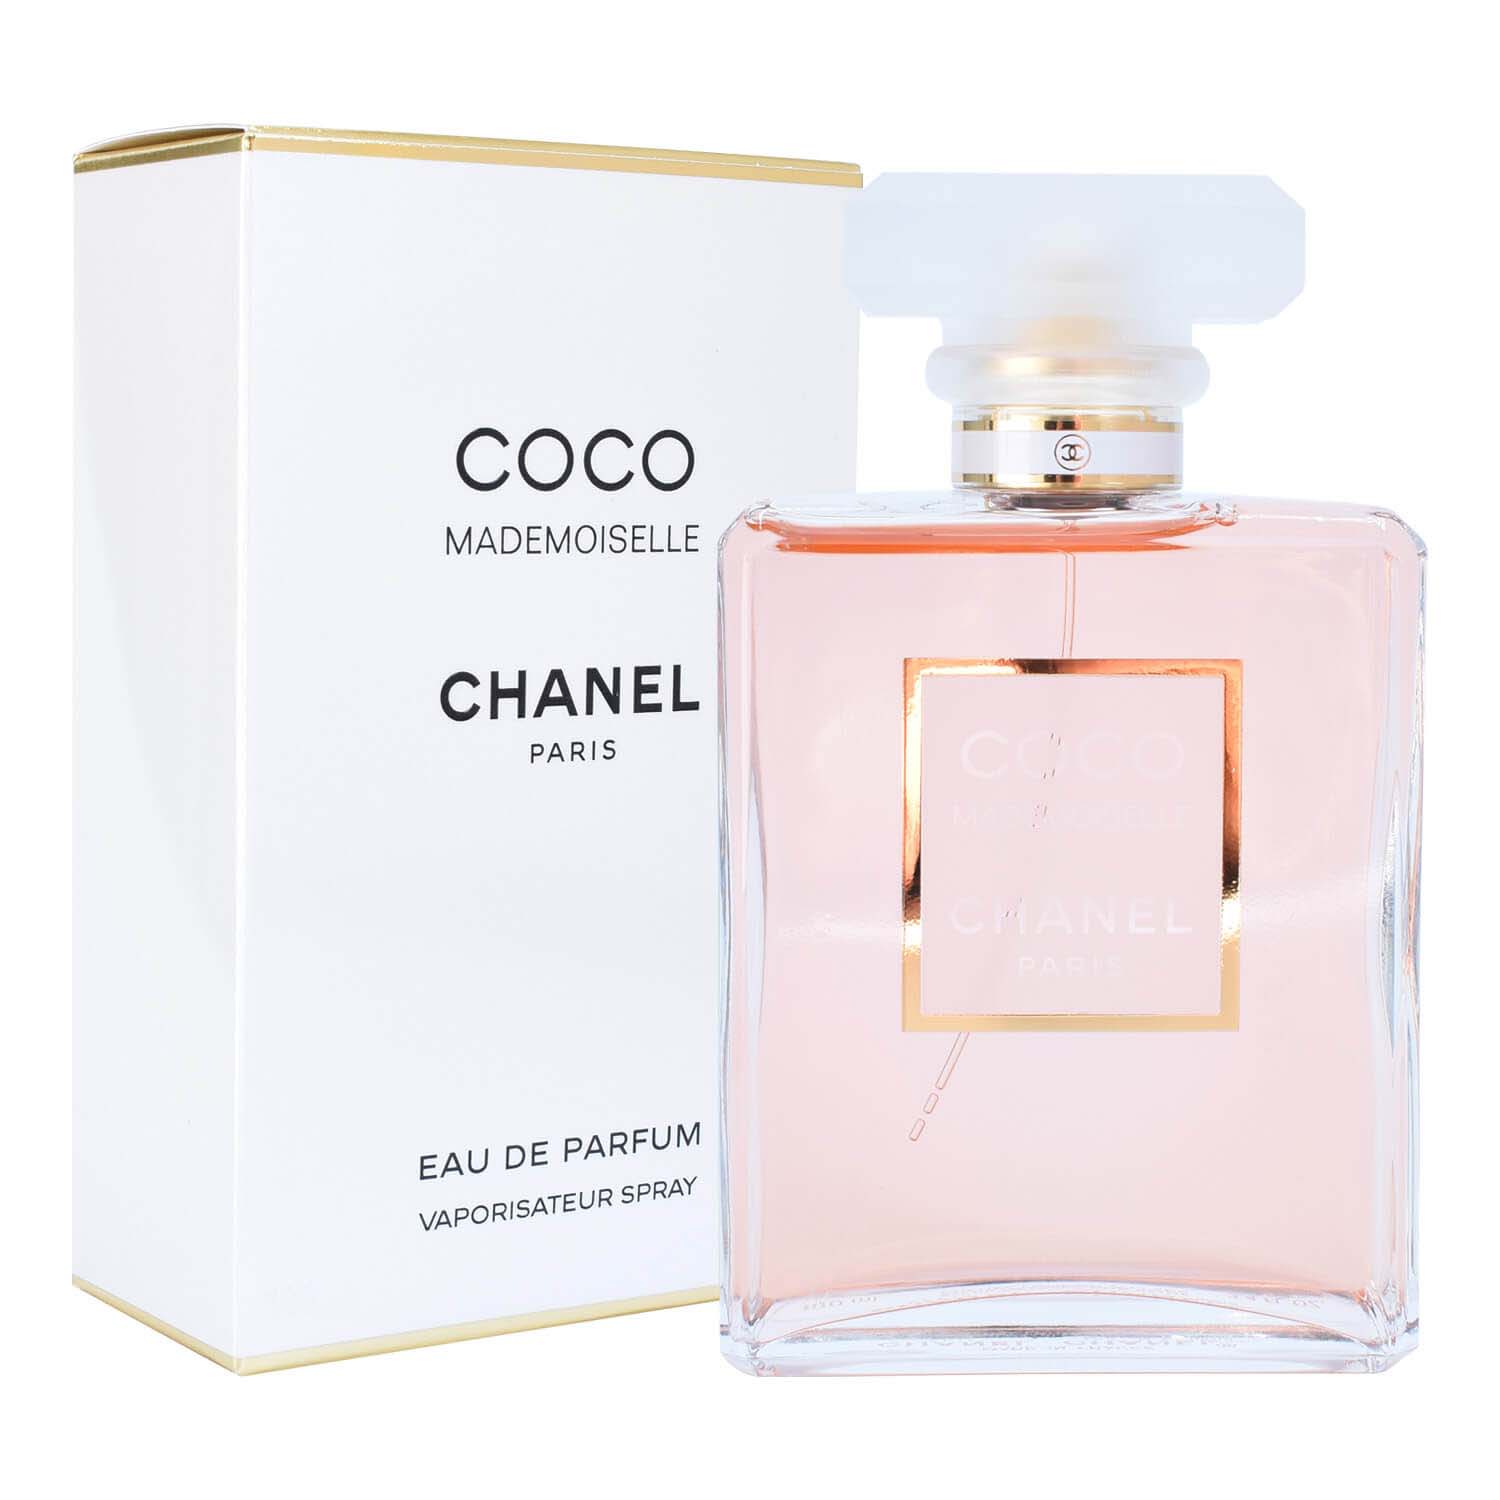 Chanel Coco Mademoiselle Eau de Parfum 50 ml Parfum Damen Duft Spray